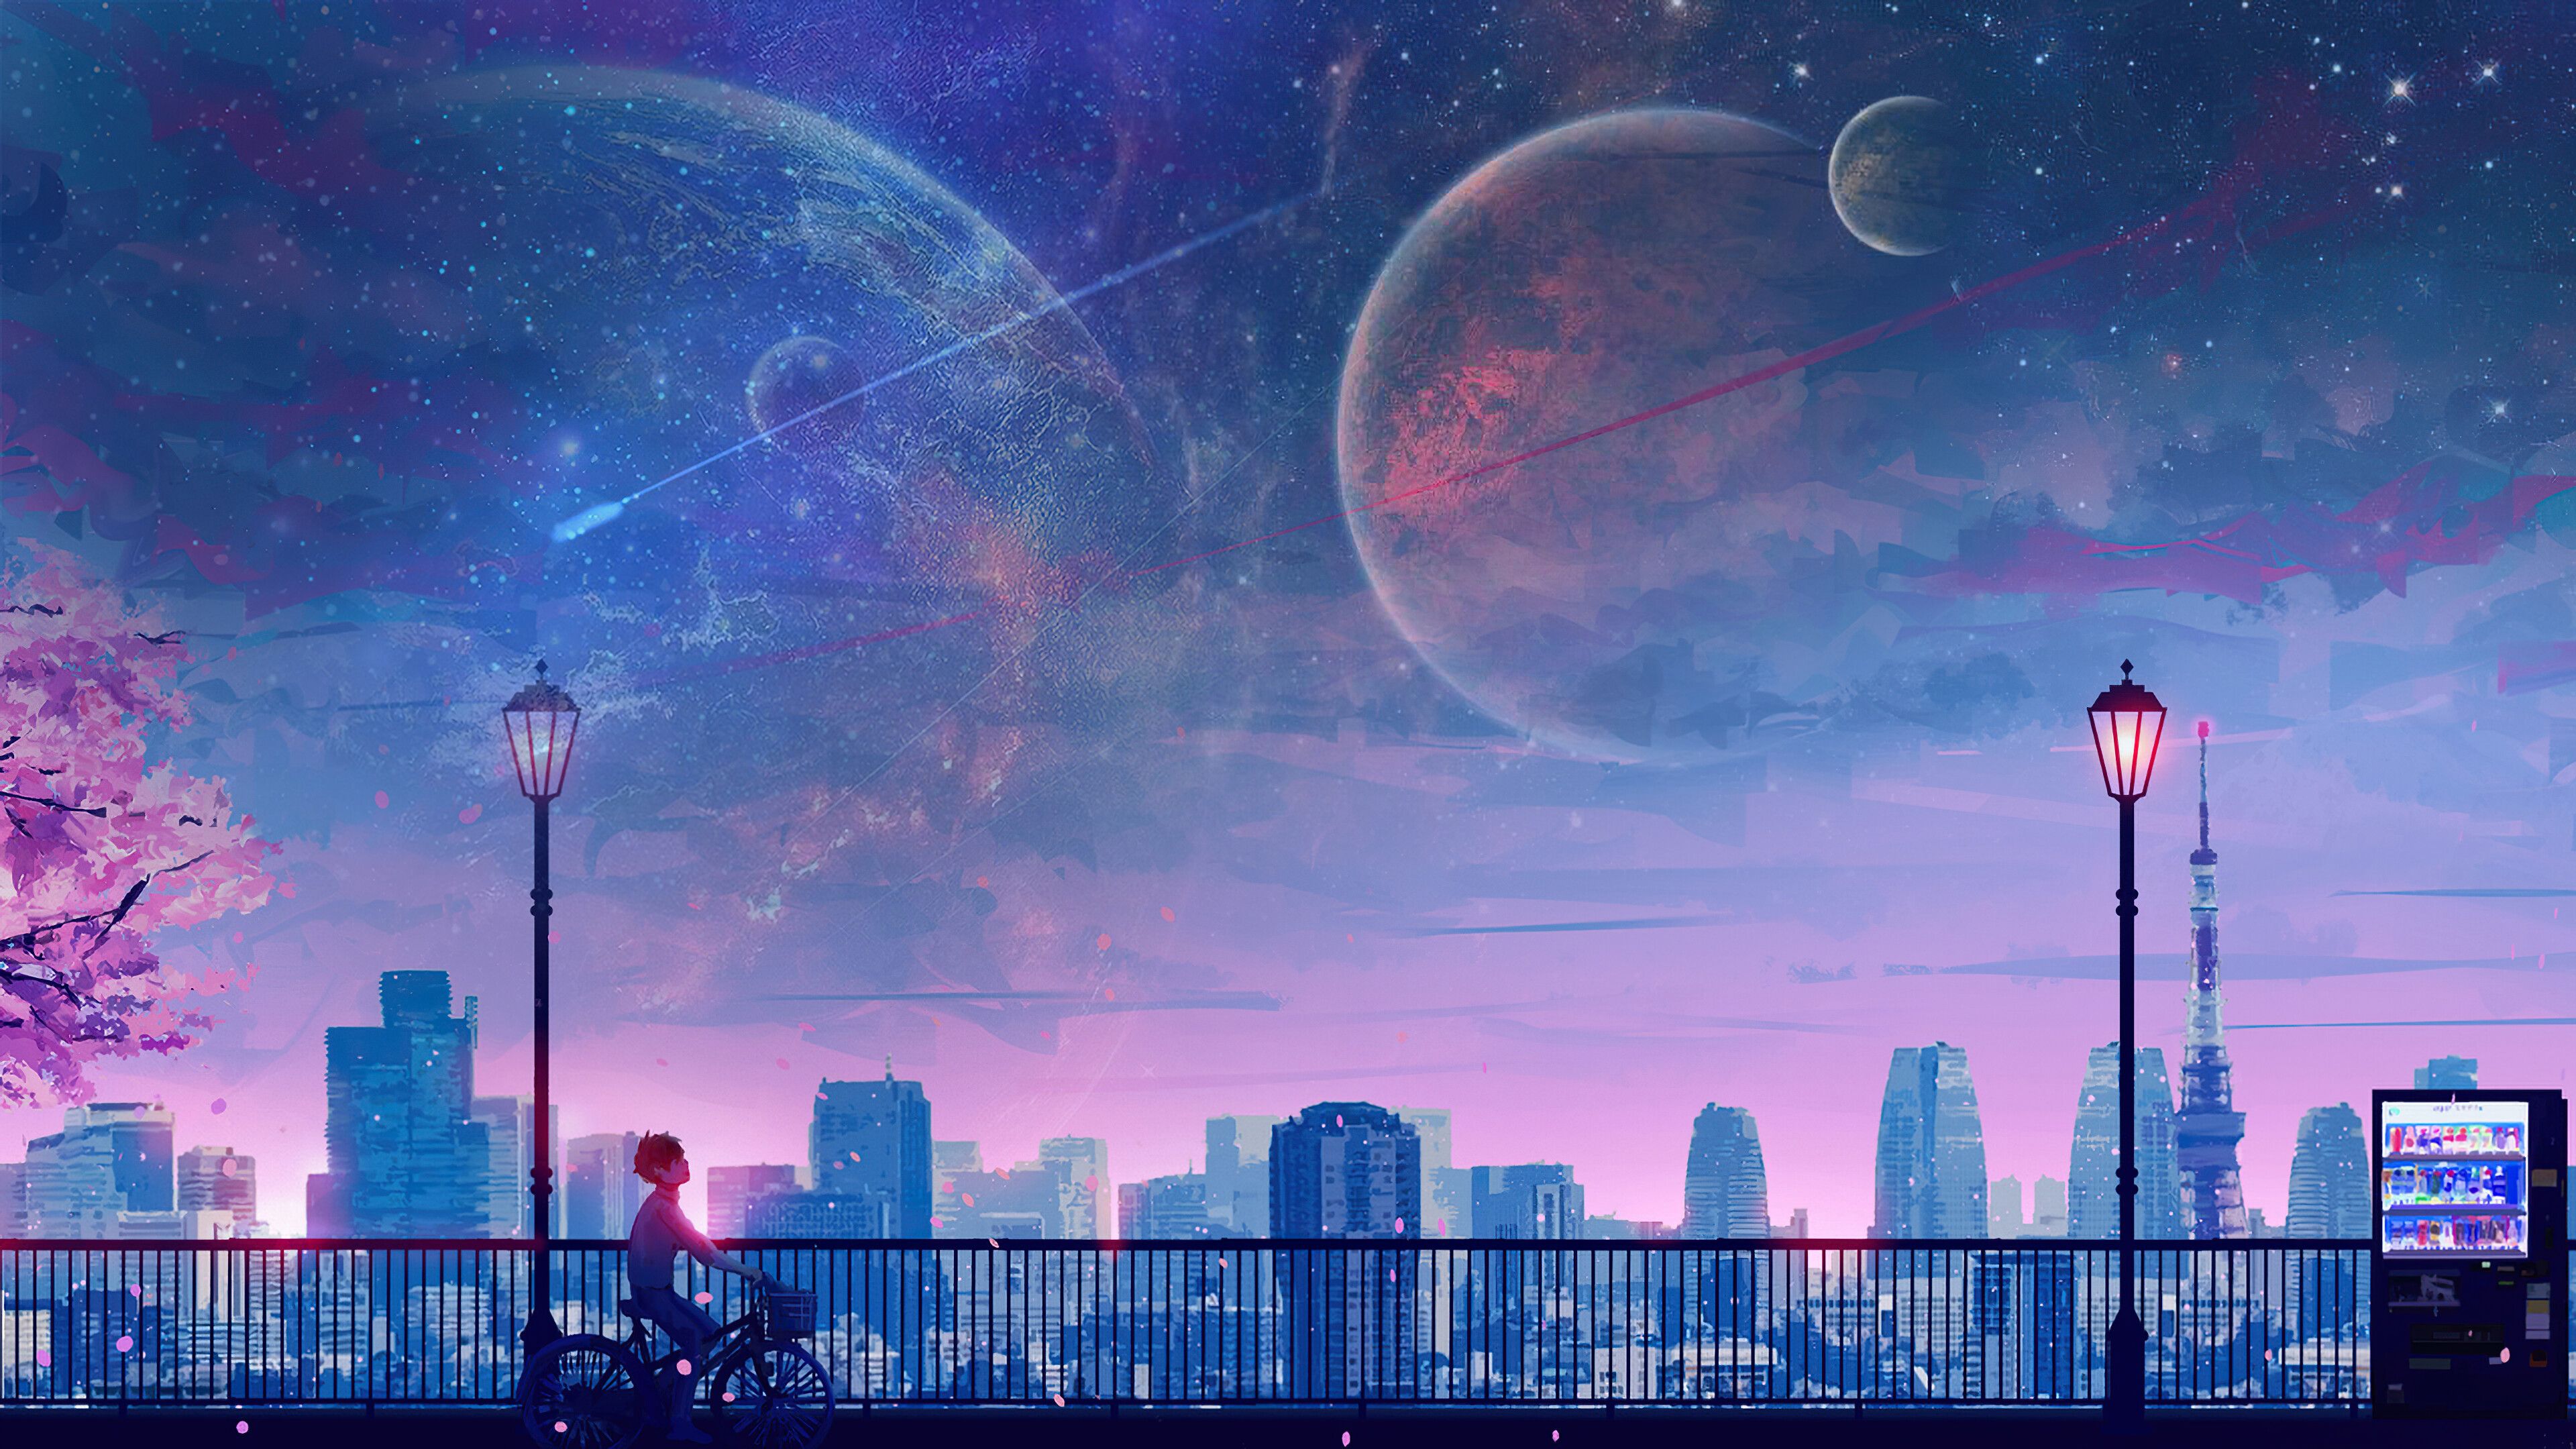 Best Anime Night City Scenery Wallpaper Image Wallpaper. Scenery wallpaper, Anime background, Anime wallpaper